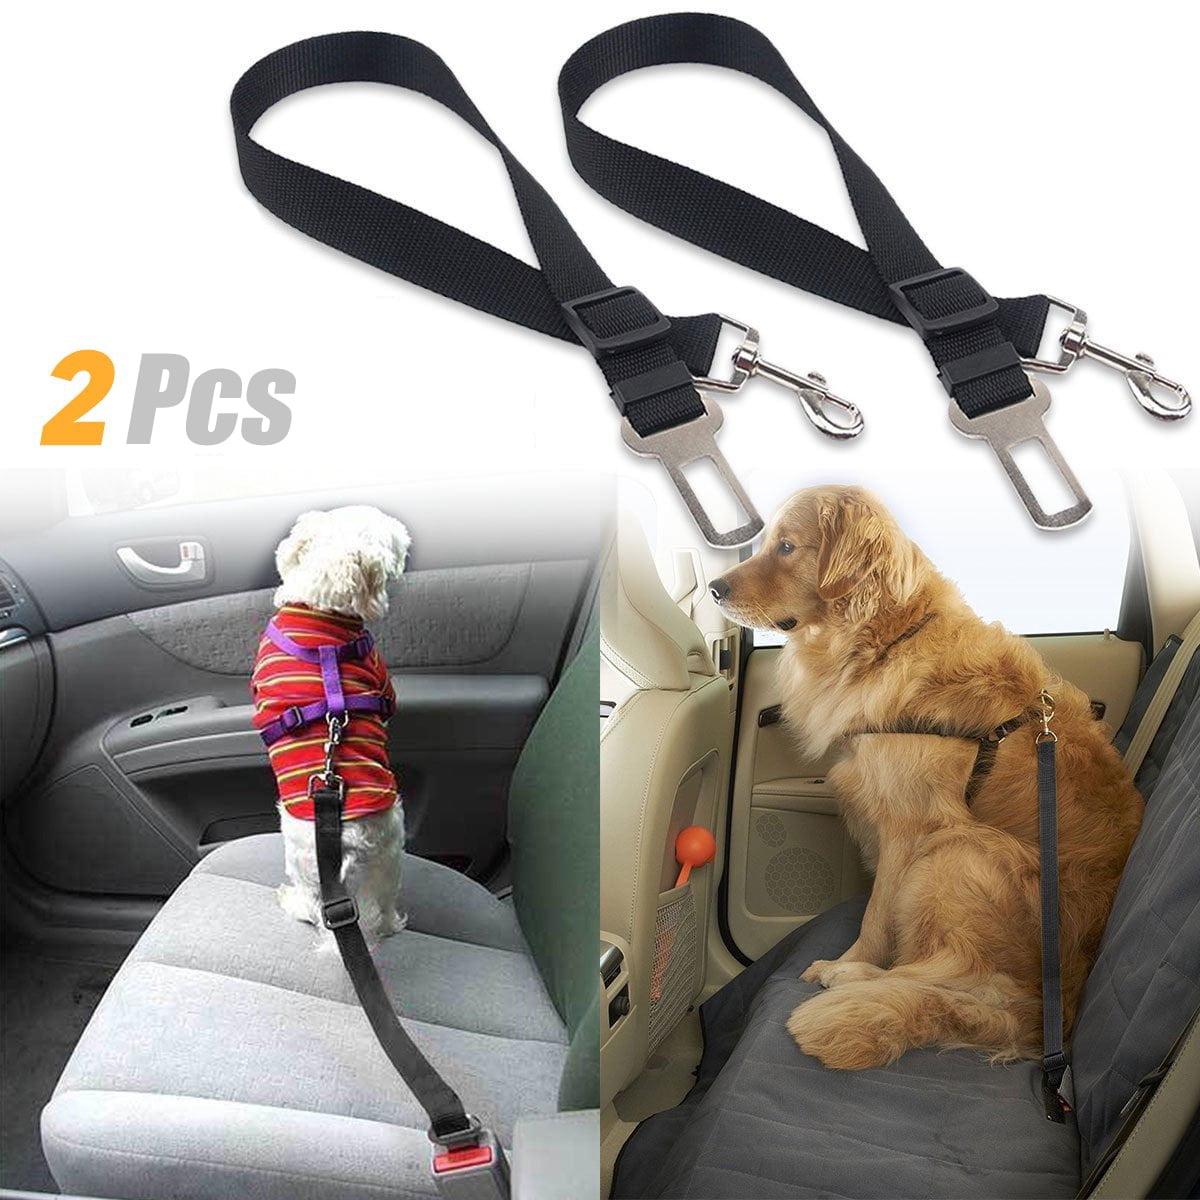 2PCS Pet Seat Belt Dog Safety Adjustable Clip Car Auto Travel Vehicle Safe Puppy 